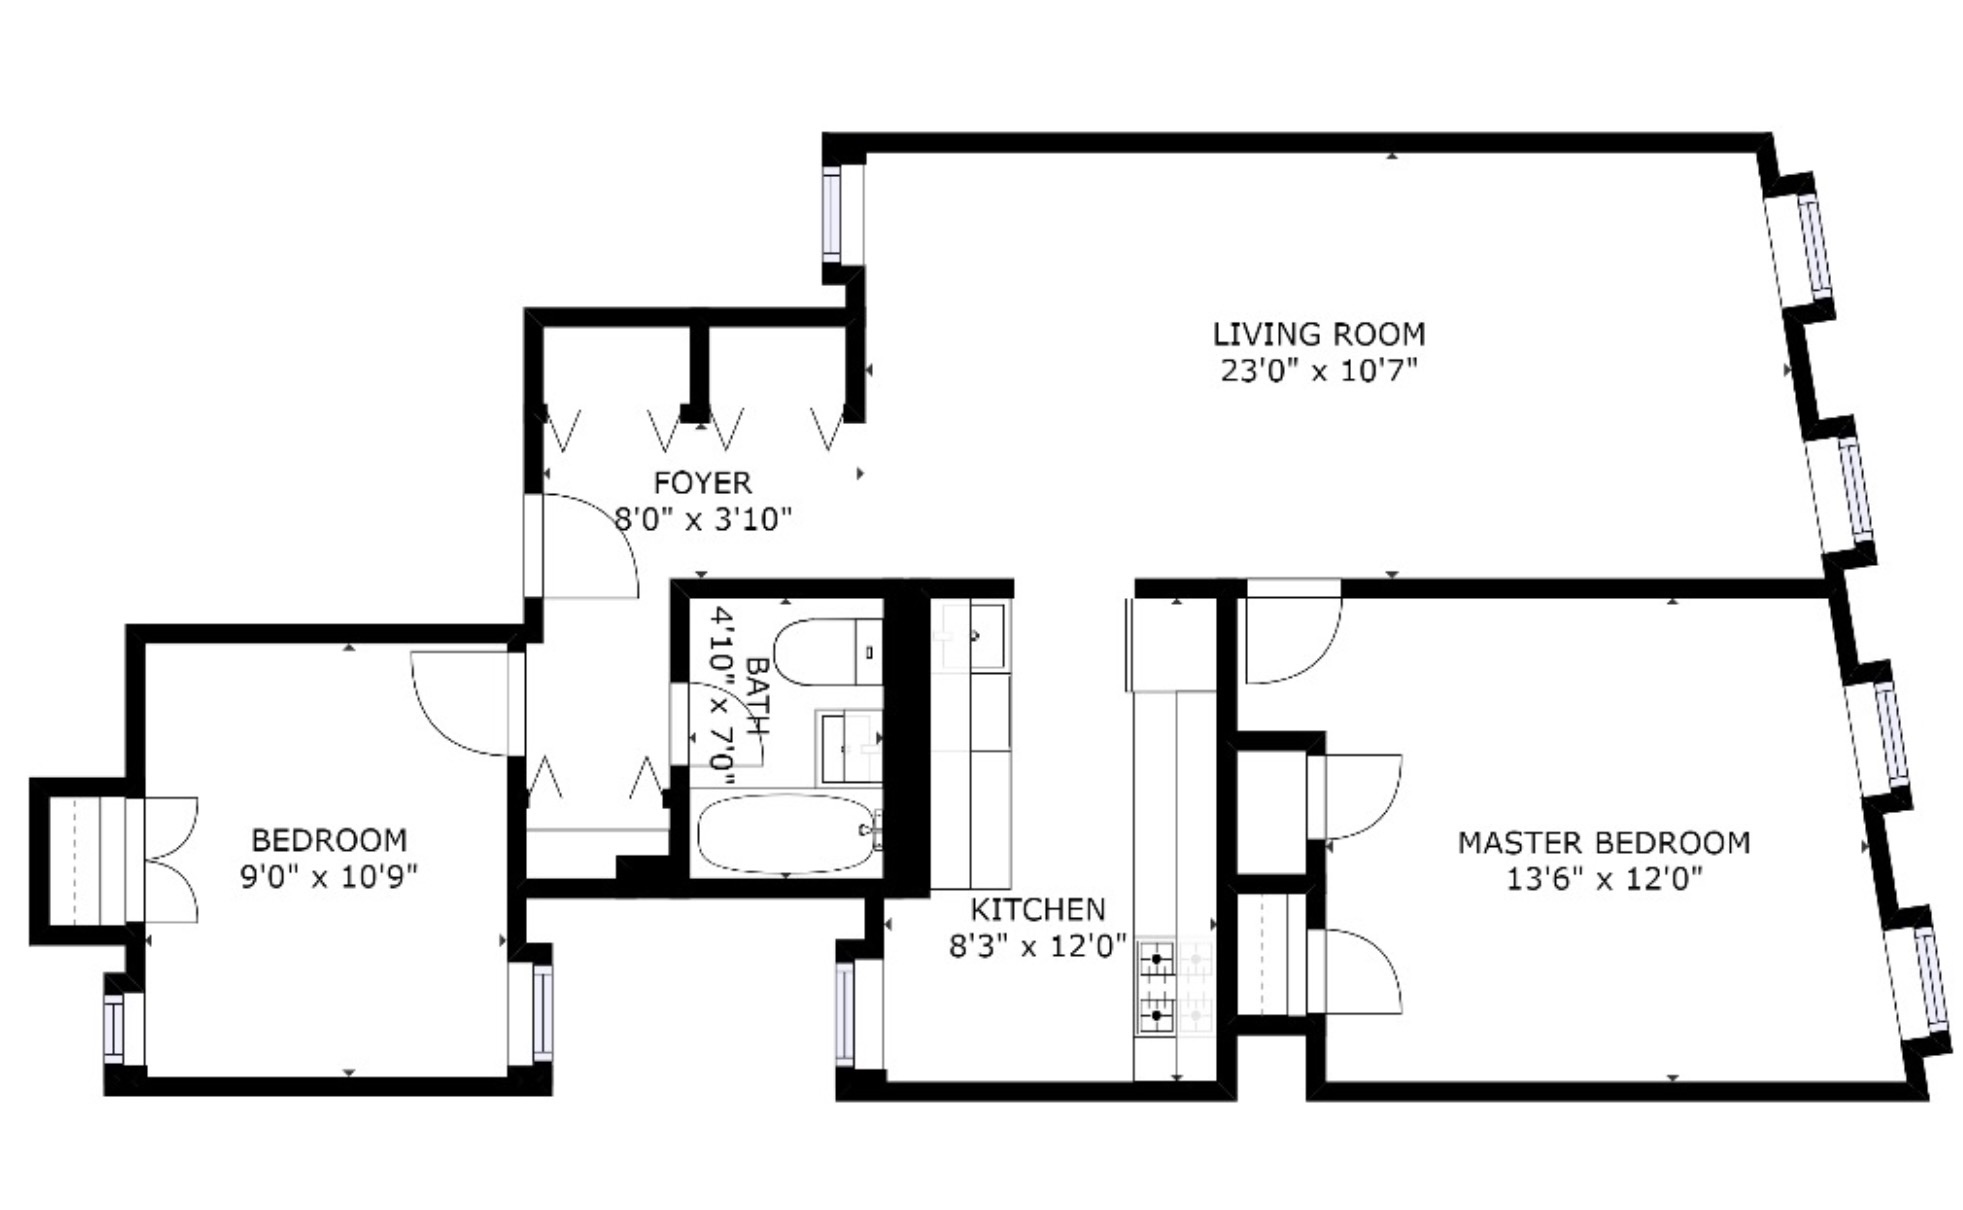 Floorplan for 135 Edgecombe Avenue, 4A